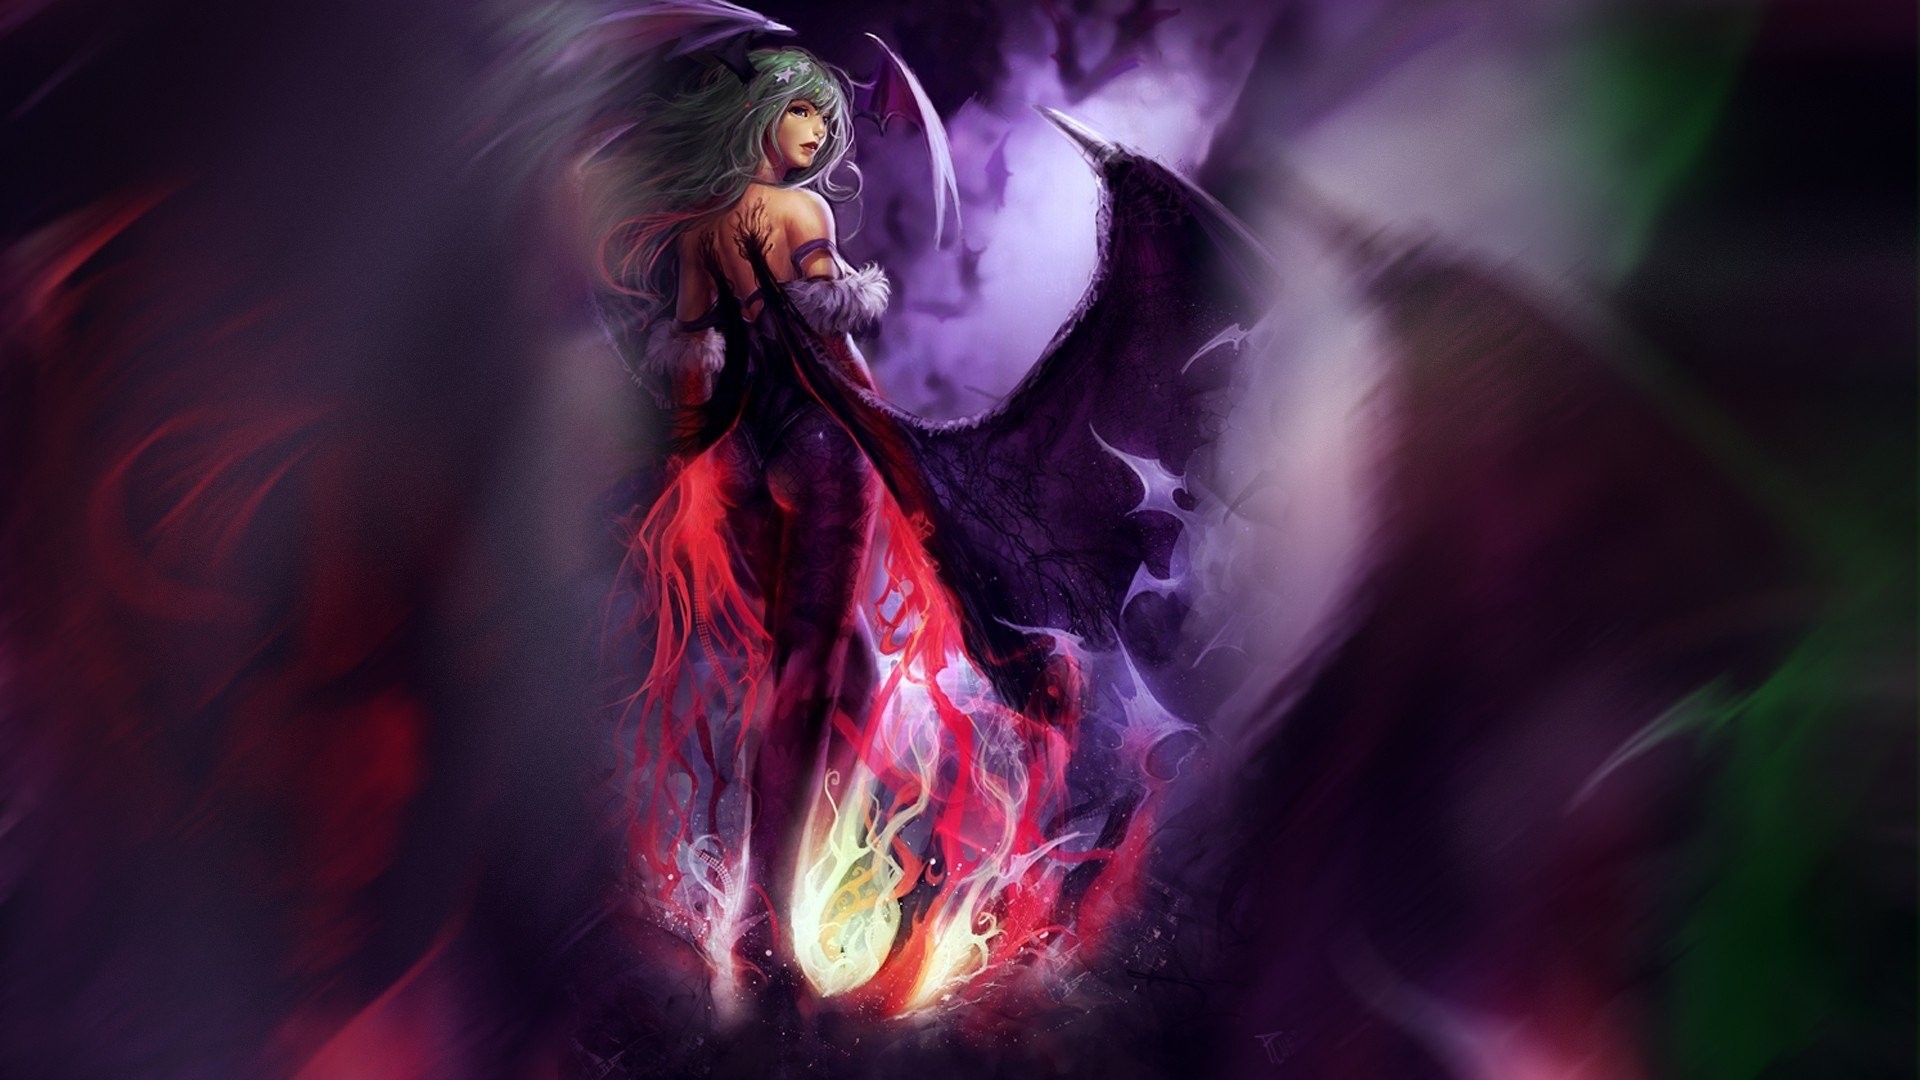 1920x1080 Video Game - Darkstalkers Woman Demon Flame Fantasy Long Hair Green Hair  Video Game Morrigan Aensland